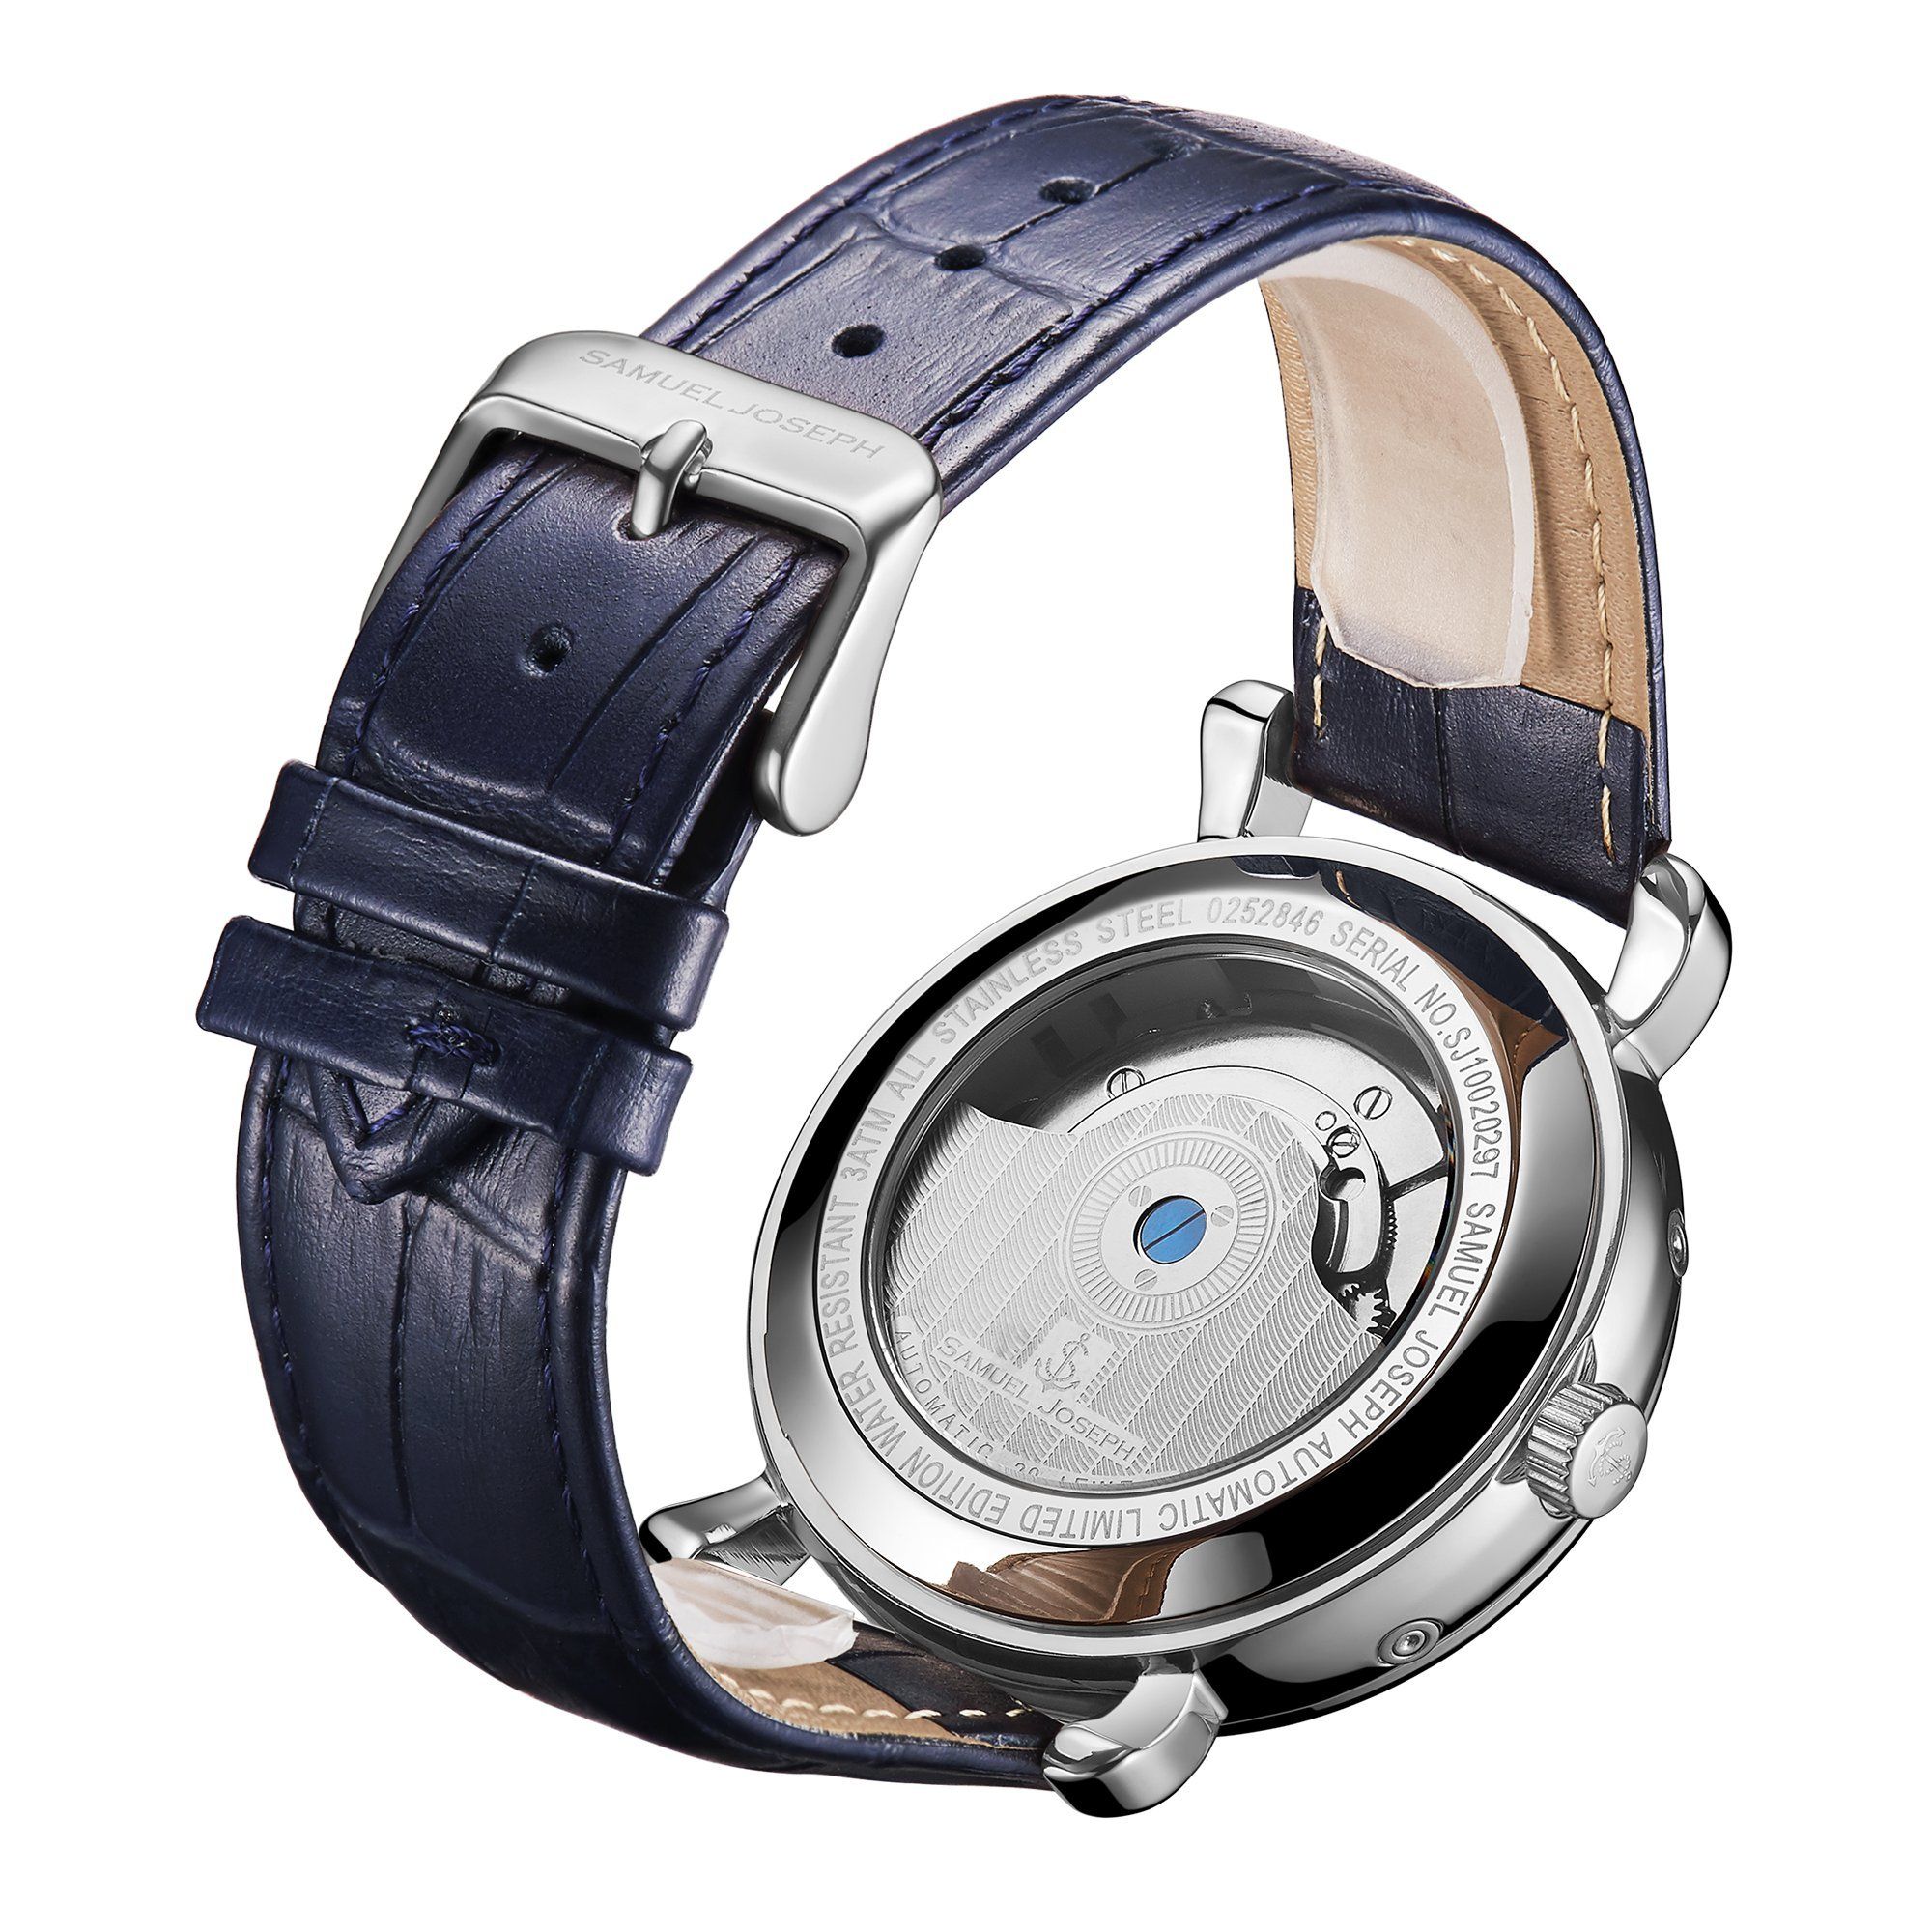 Samuel Joseph Limited Edition Steel & Blue Automatic Designer Mens Watch